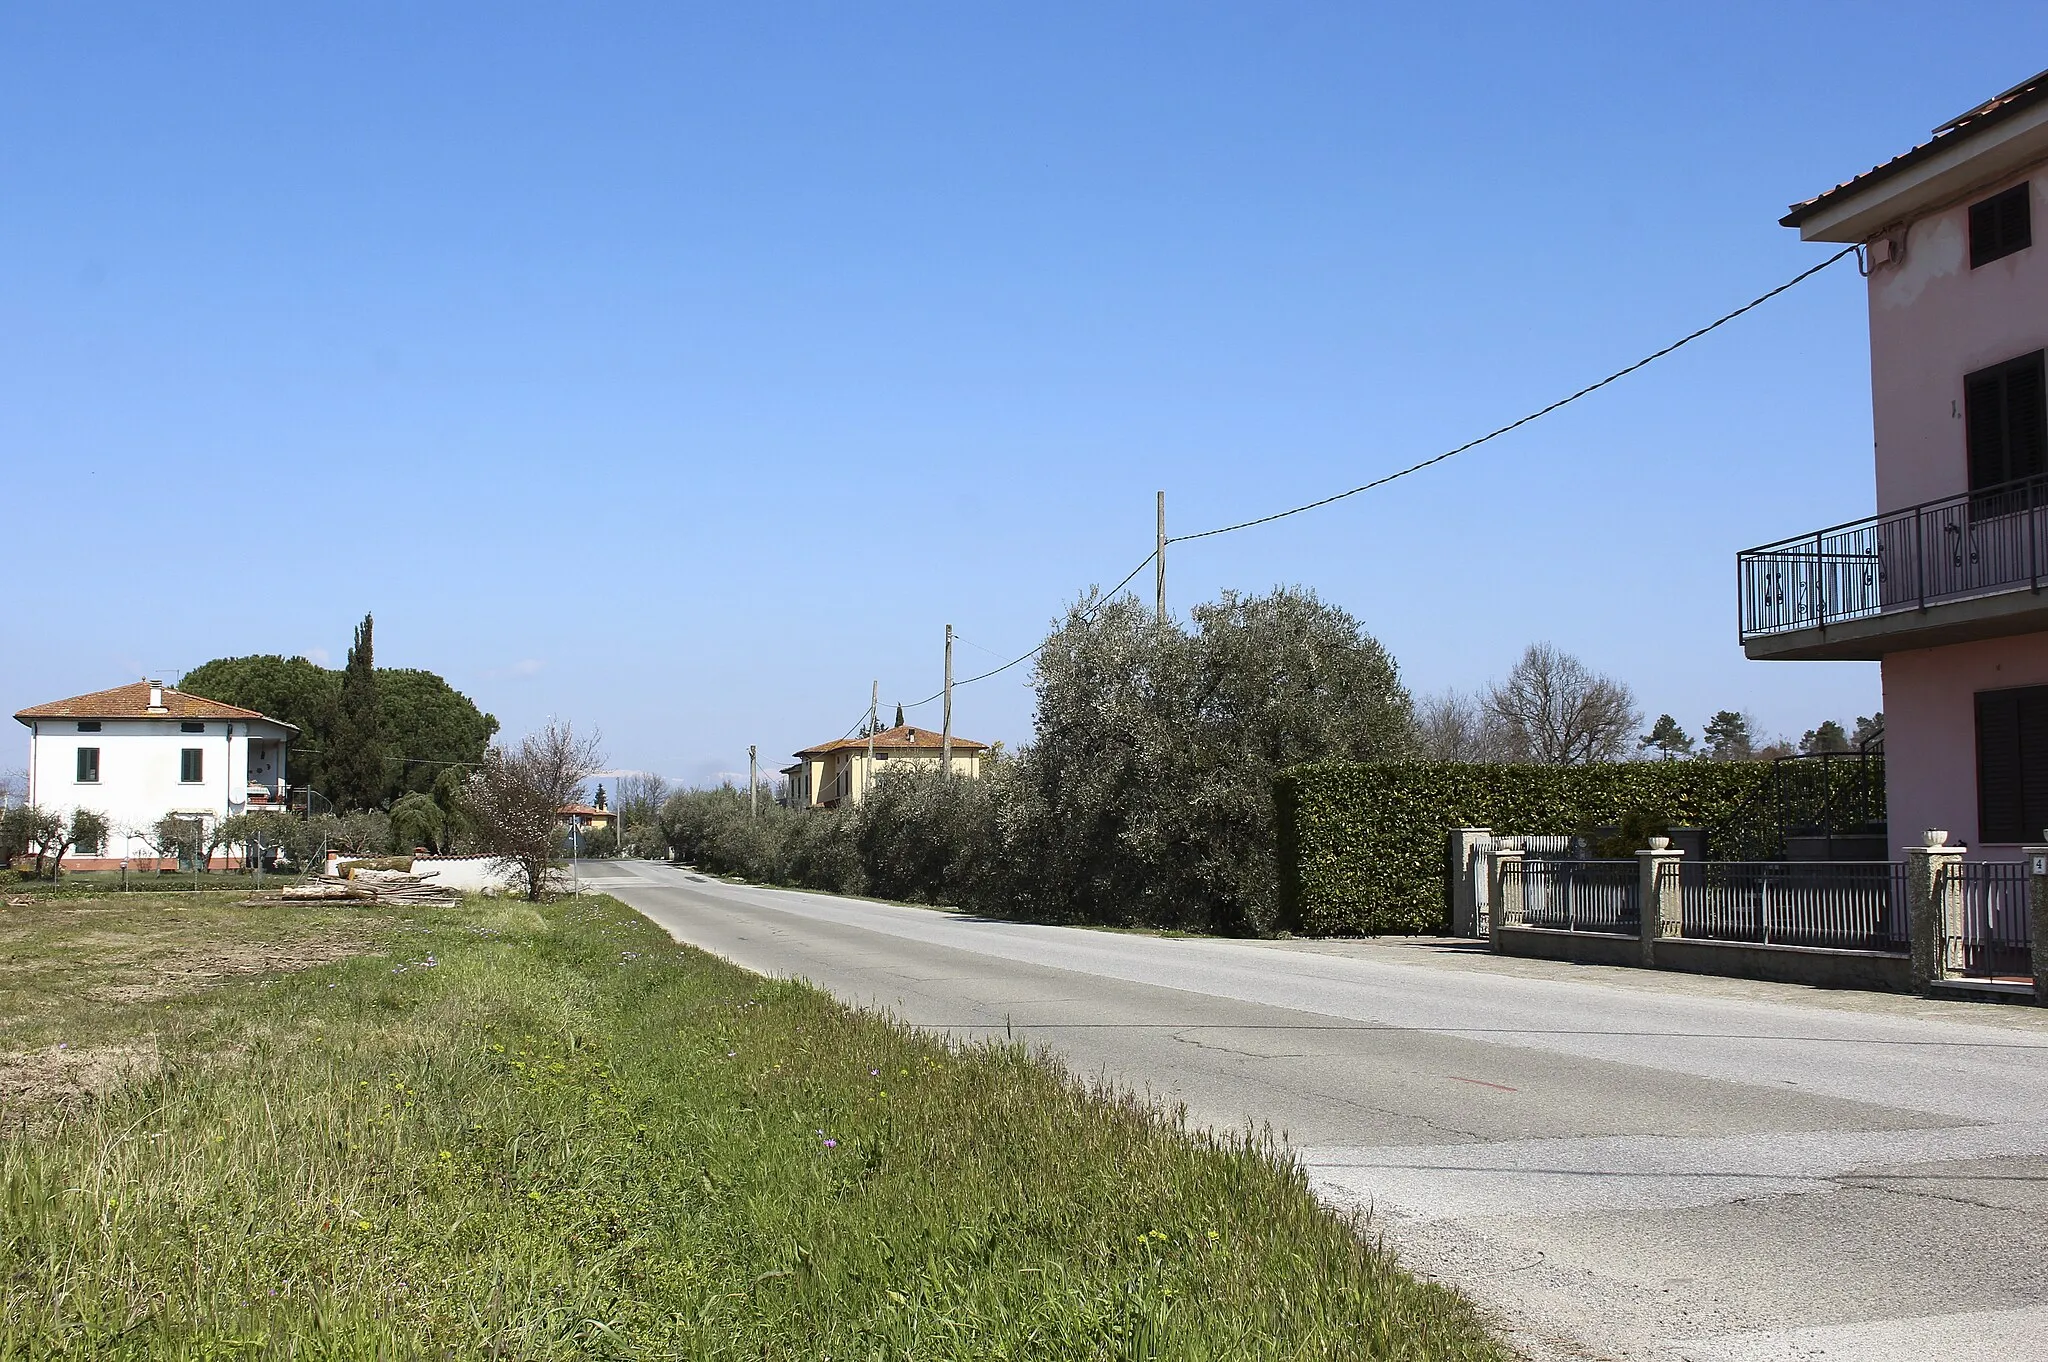 Photo showing: Cerretti, hamlet of Santa Maria a Monte, Province of Pisa, Tuscany, Italy